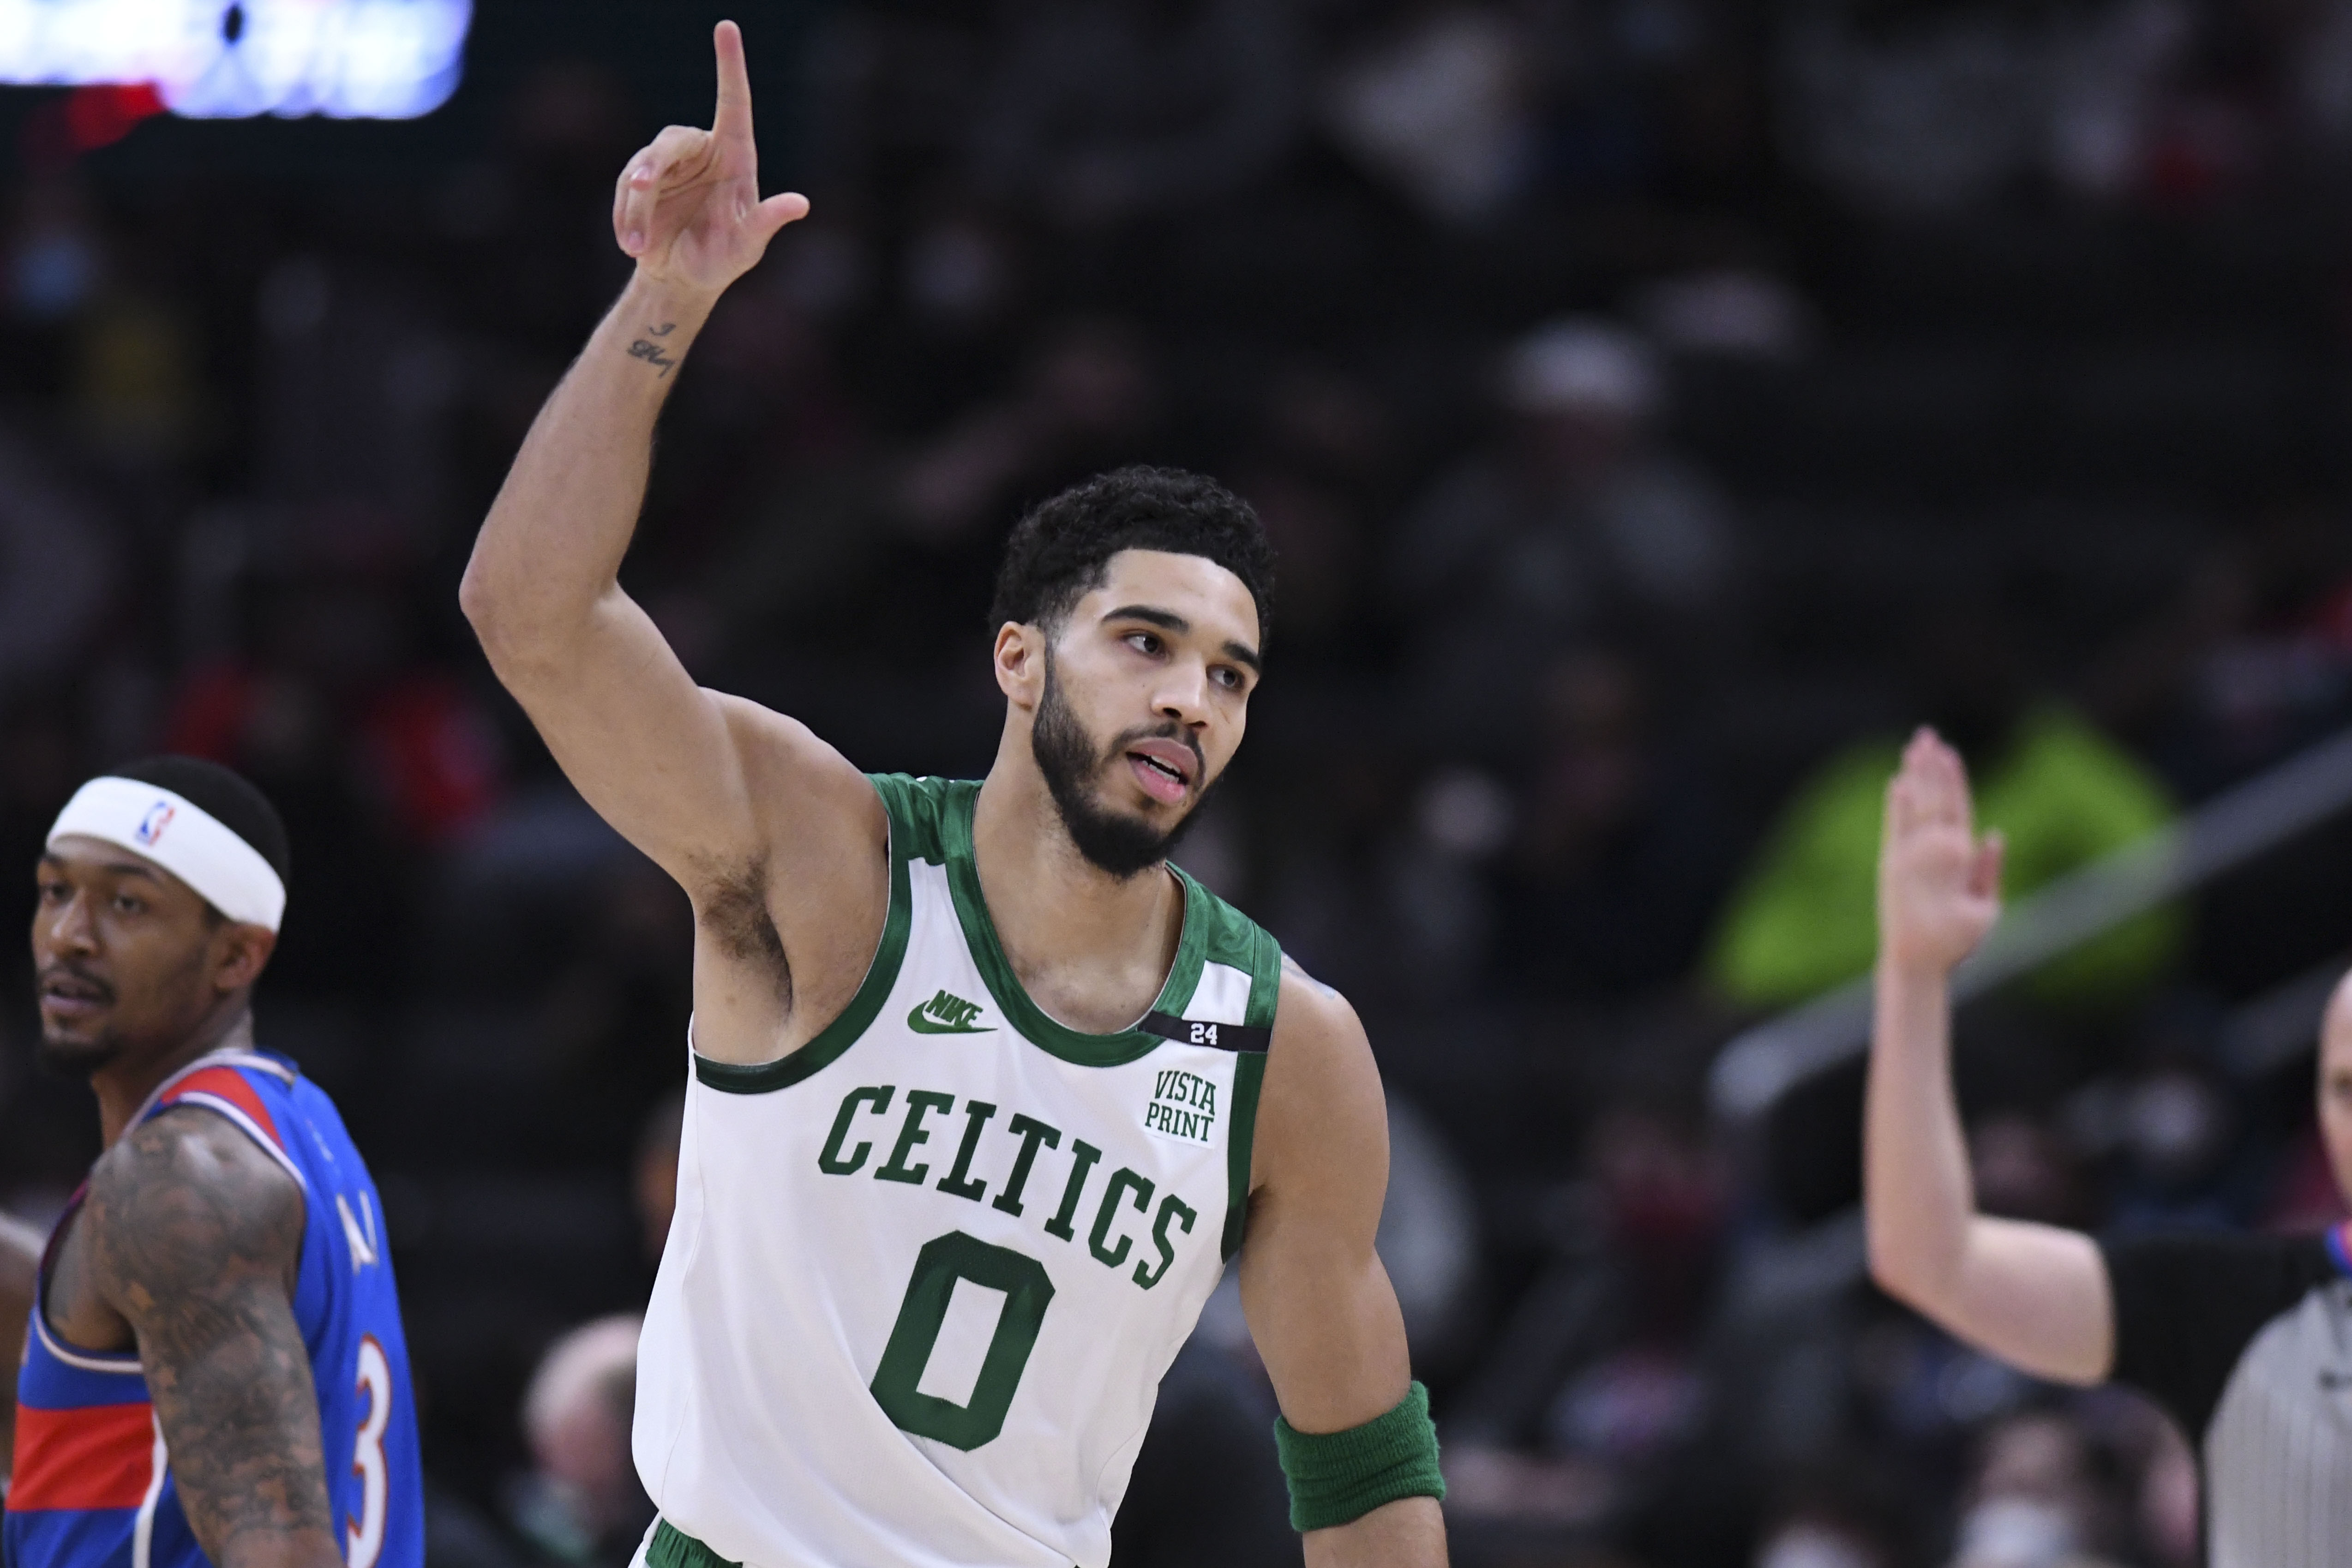 NBA: Boston Celtics at Washington Wizards